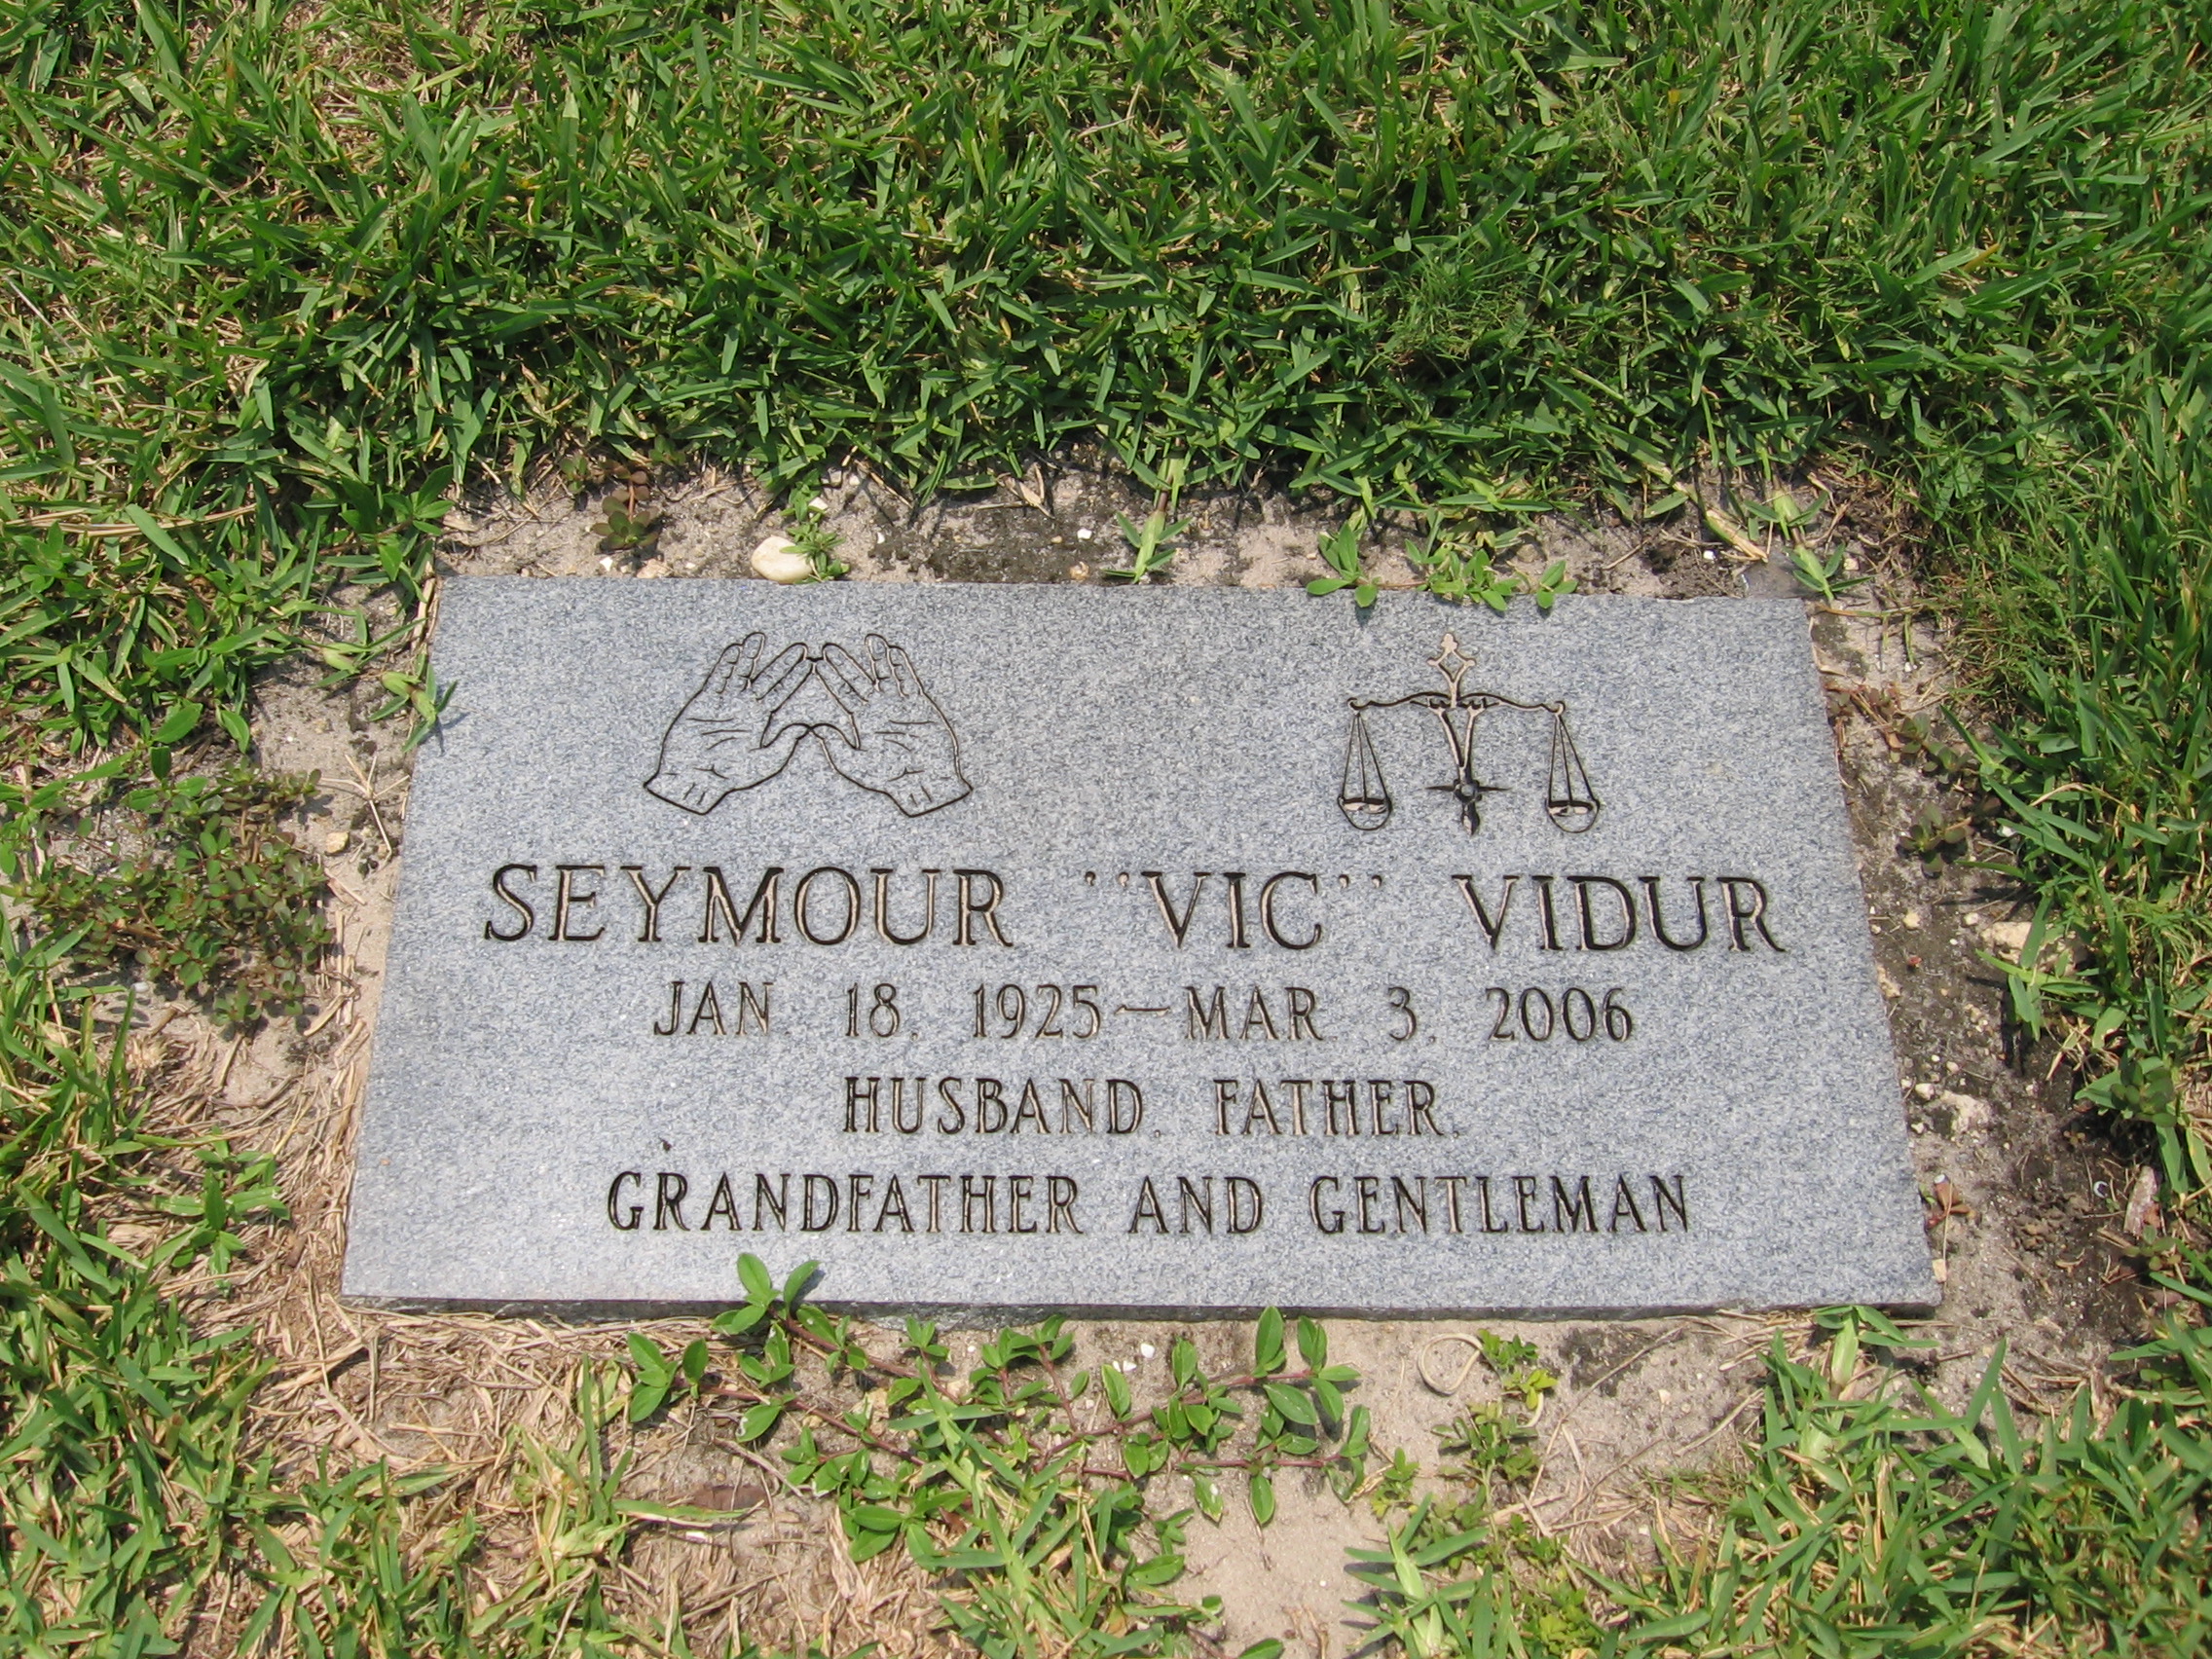 Seymour "Vic" Vidur